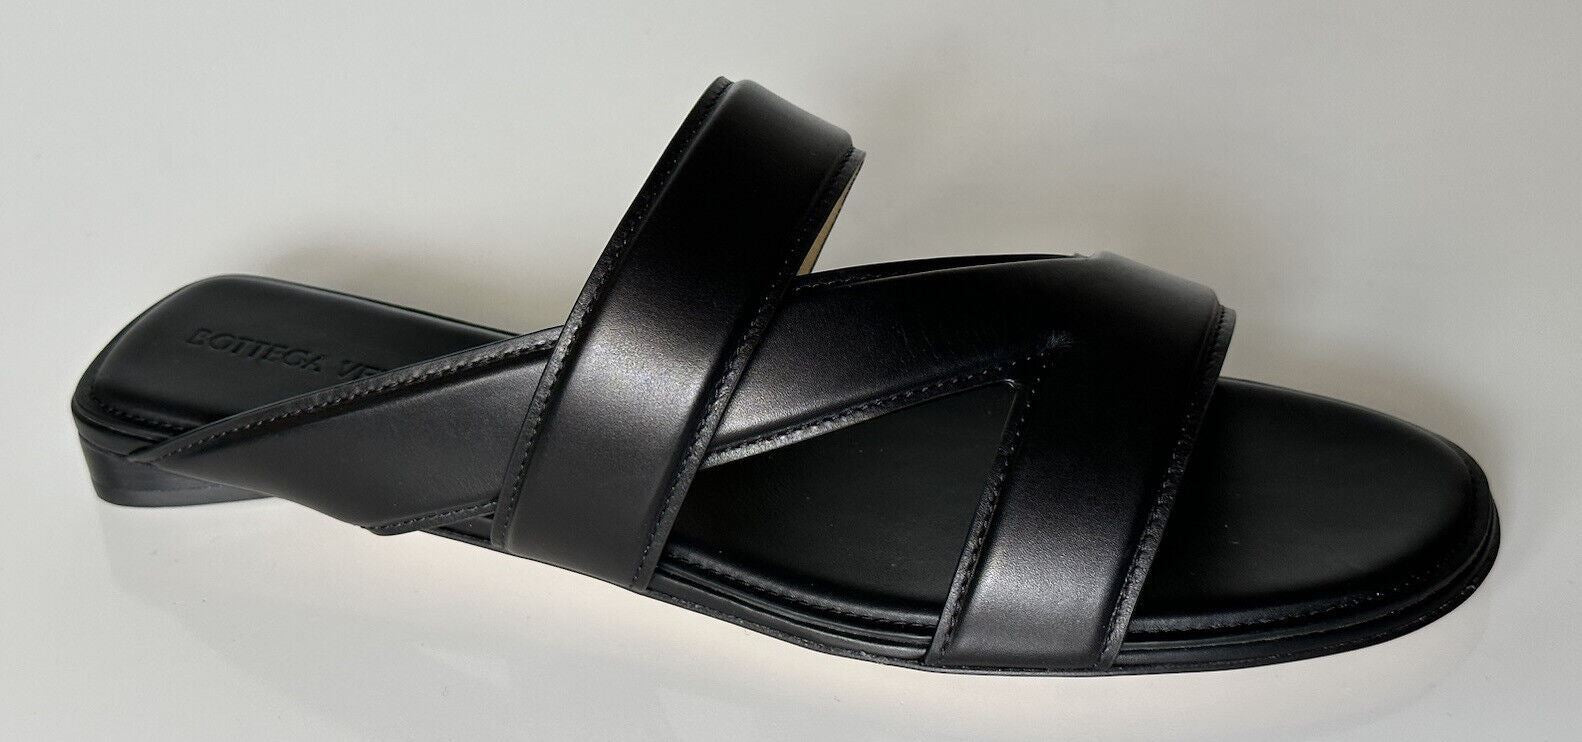 NIB $760 Bottega Veneta Calf Leather Mule Sandals Shoes Black 10 US 651374